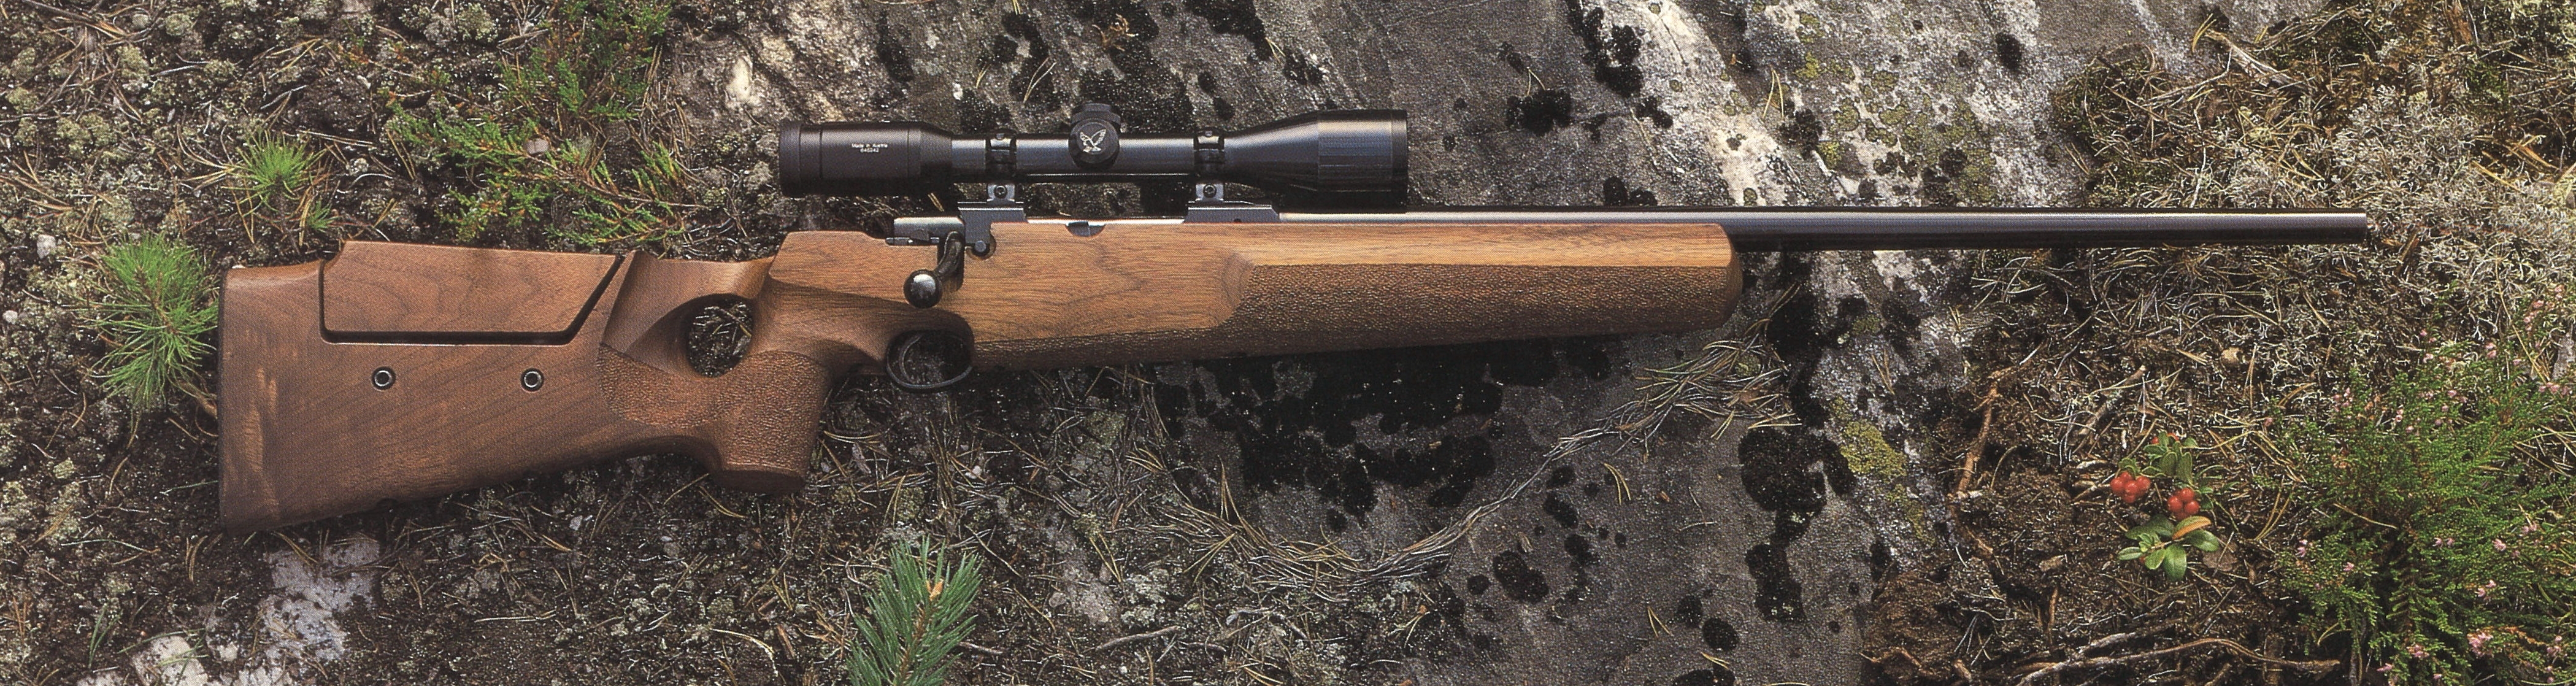 ./guns/rifle/bilder/Rifle-Kongsberg-Lakelander-389-Sporter-1.jpg